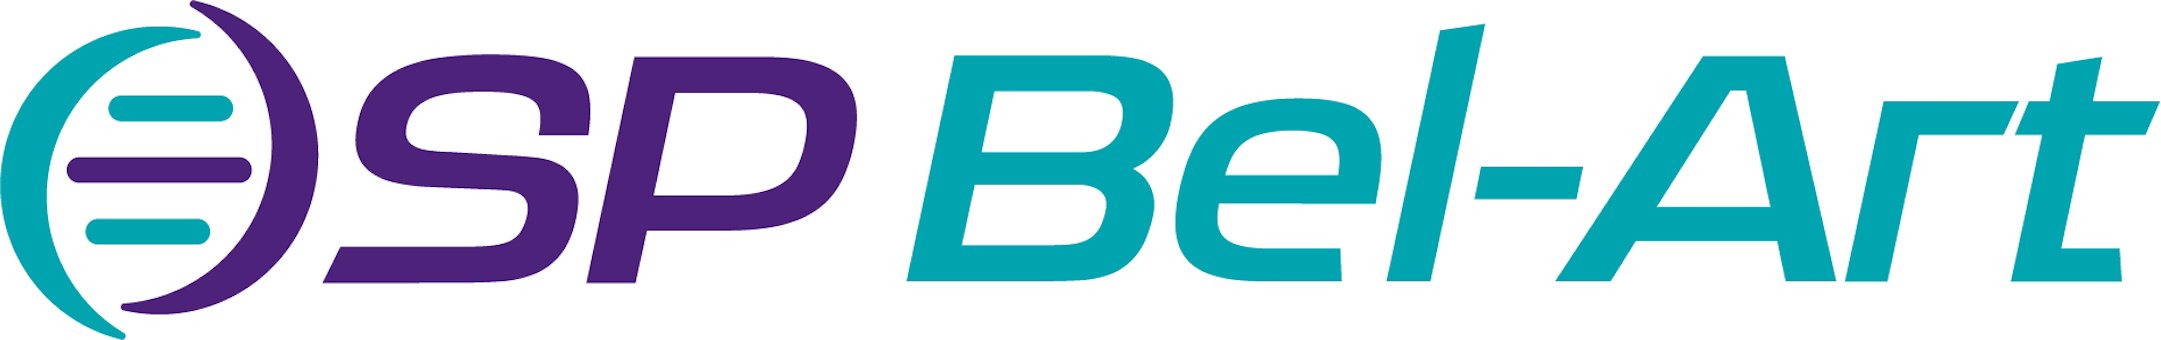 Bel-Art Sterileware,Pp,Powder Funnel,138ml,36cs - BEL; BEL-14660-1080